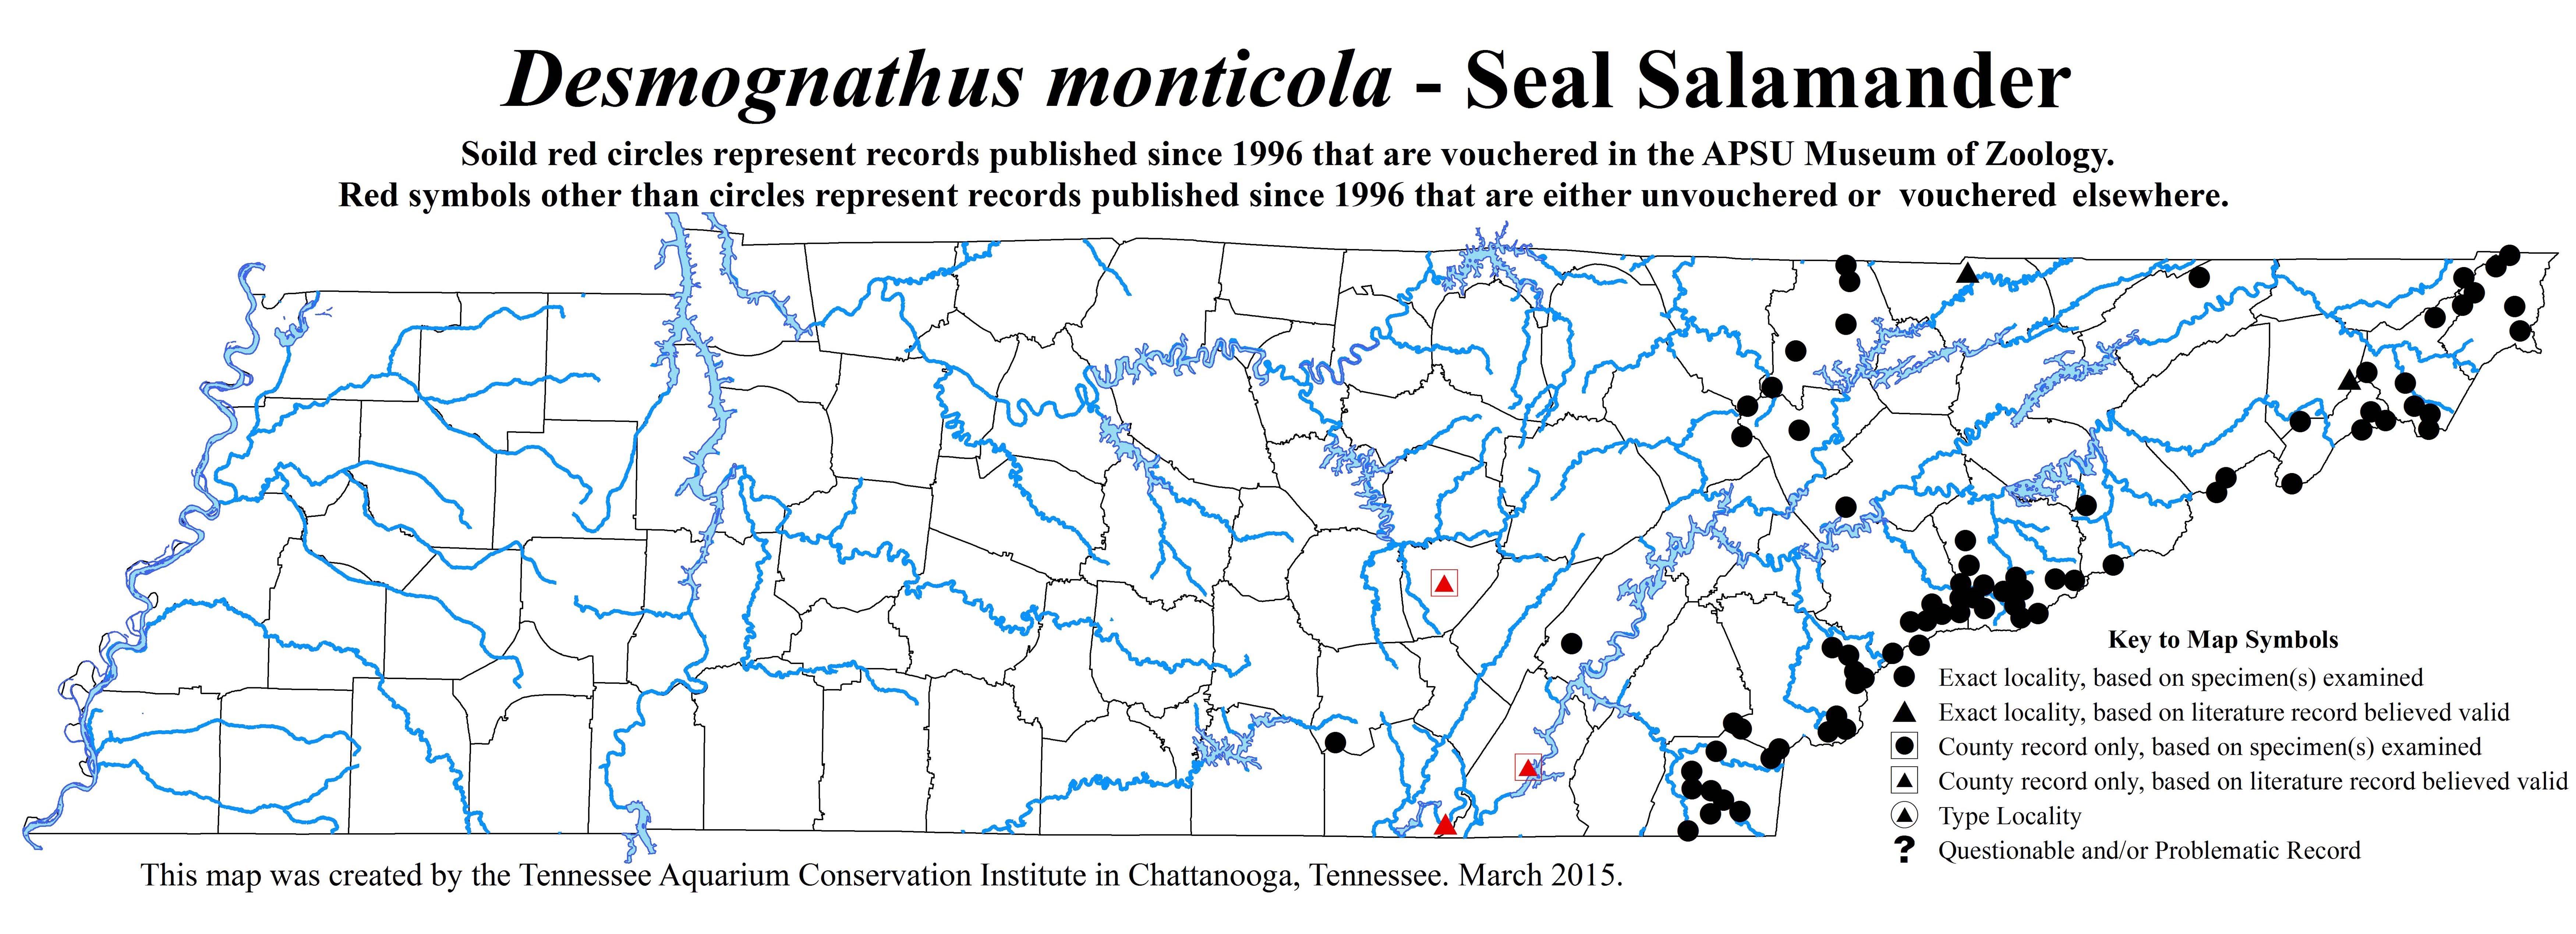 New Distribution Map - Desmognathus monticola Dunn - Seal Salamander